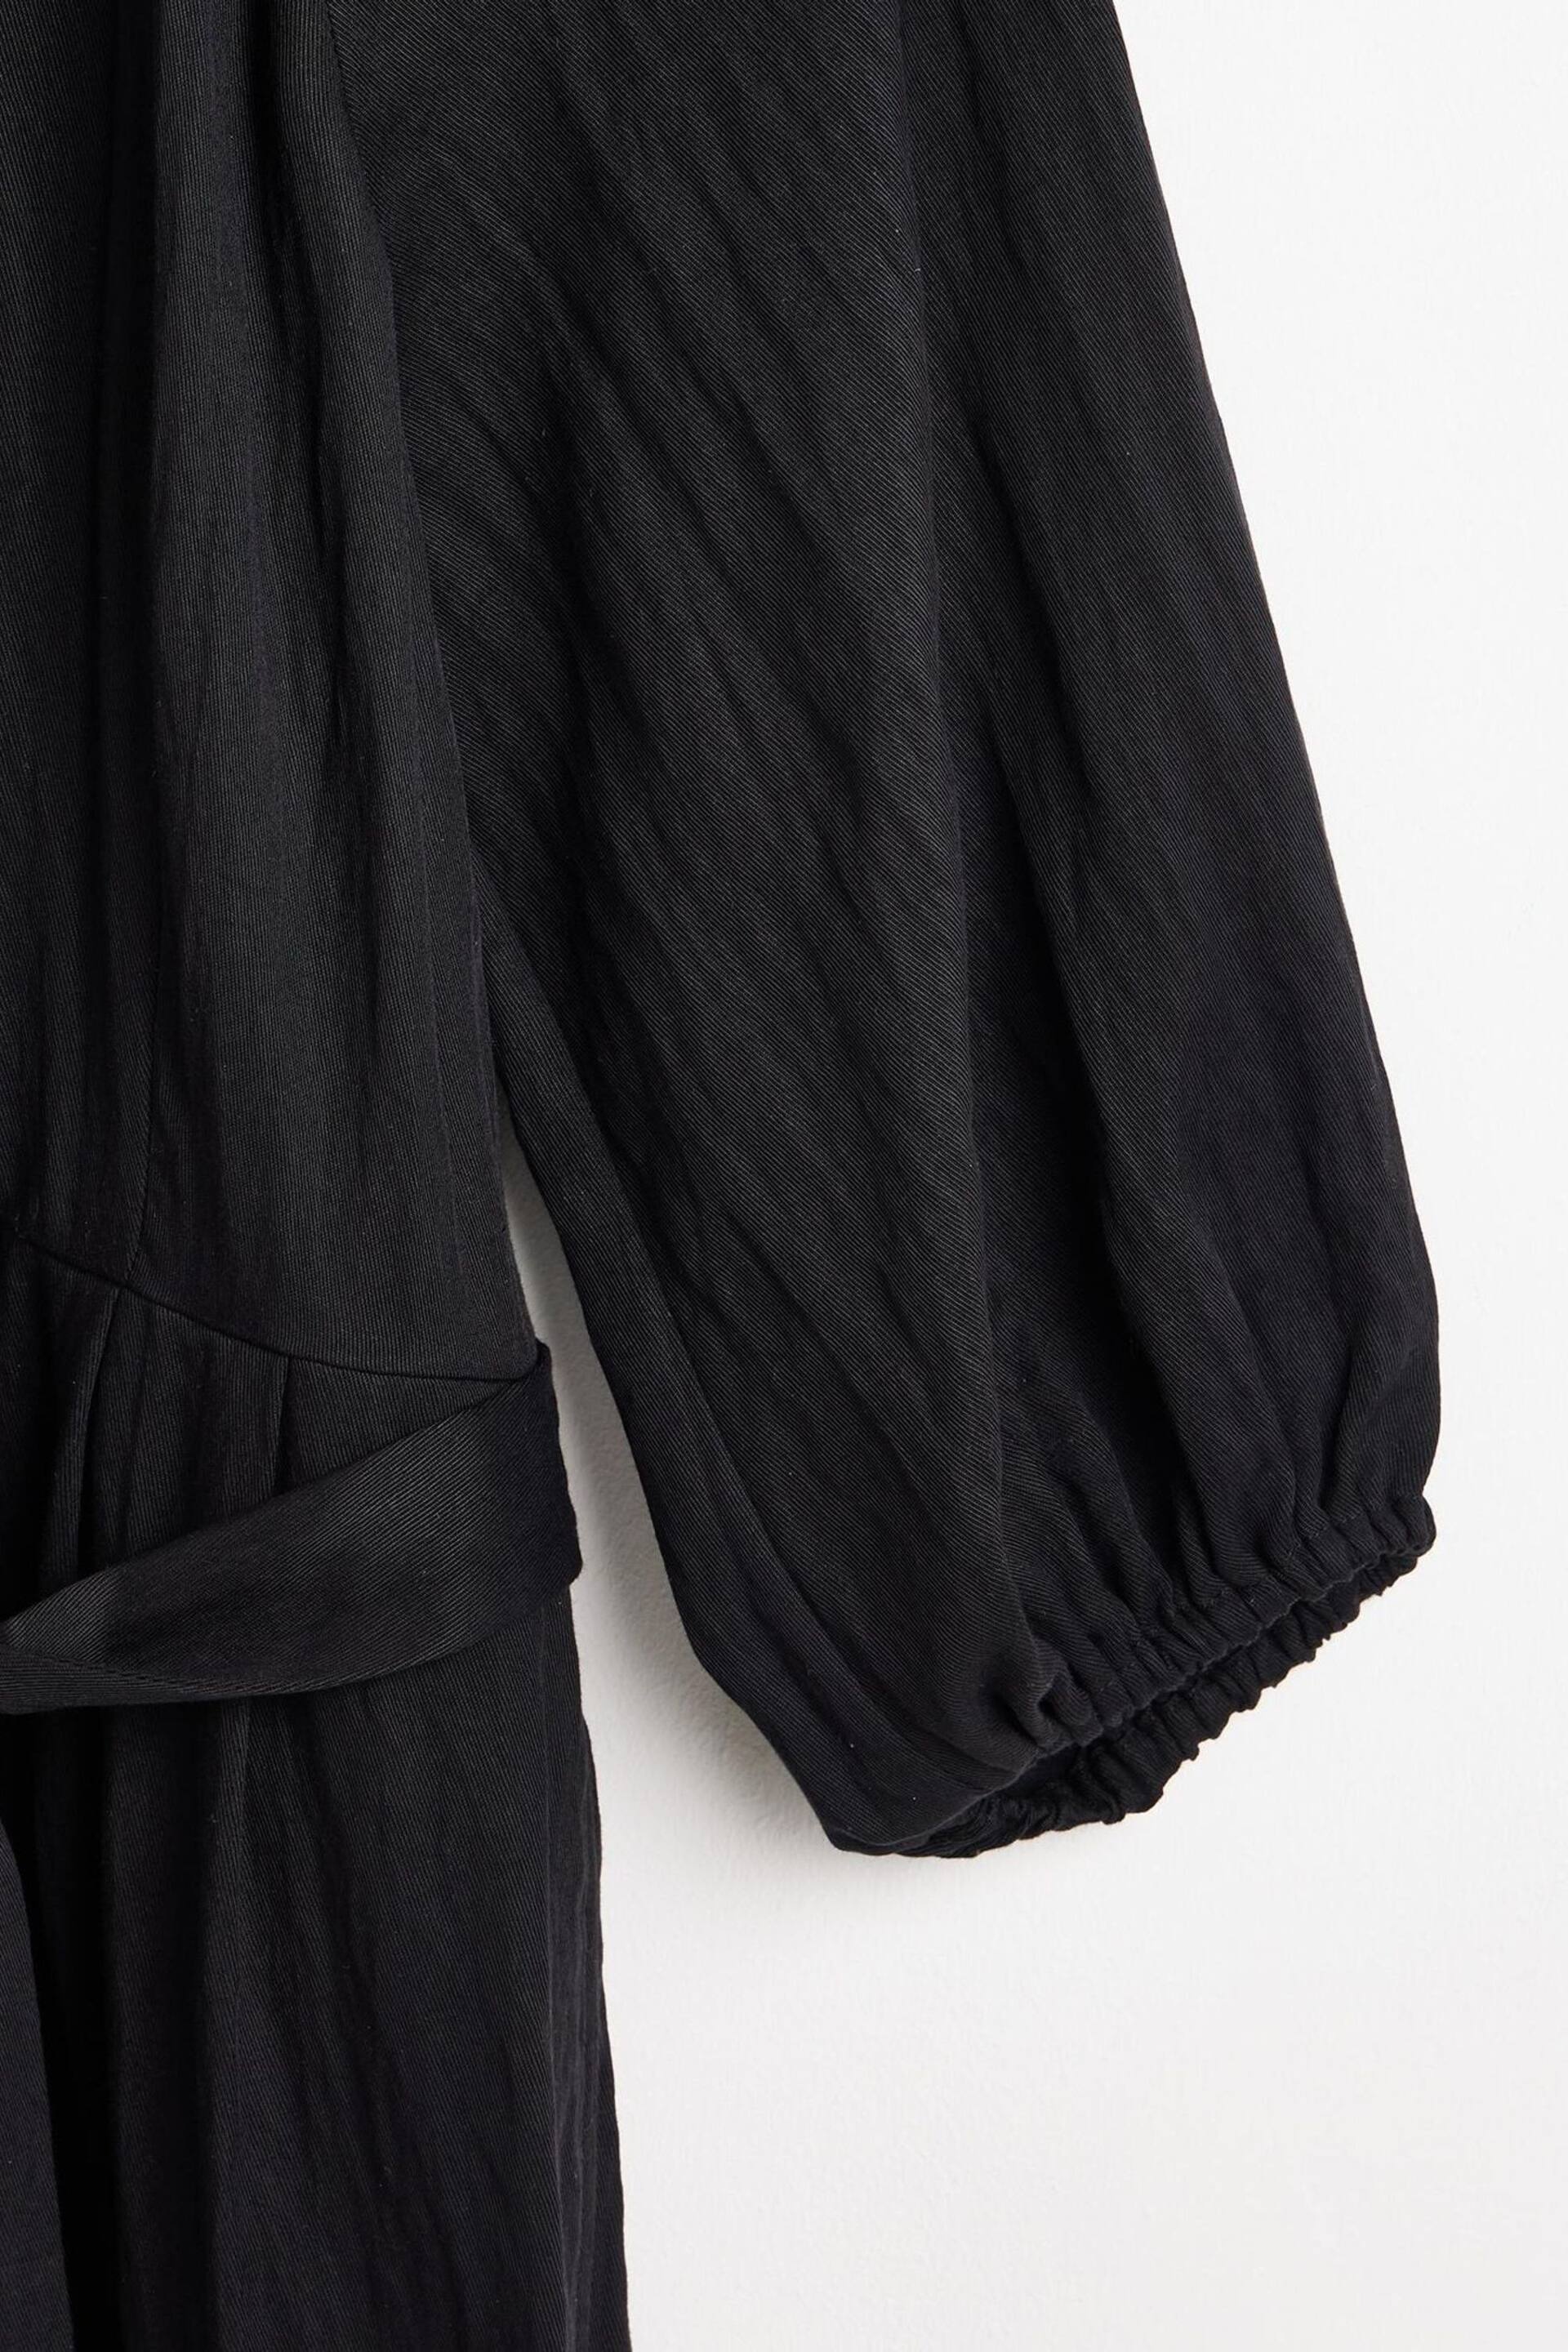 Oliver Bonas Collarless Wide Leg Black Jumpsuit - Image 6 of 9